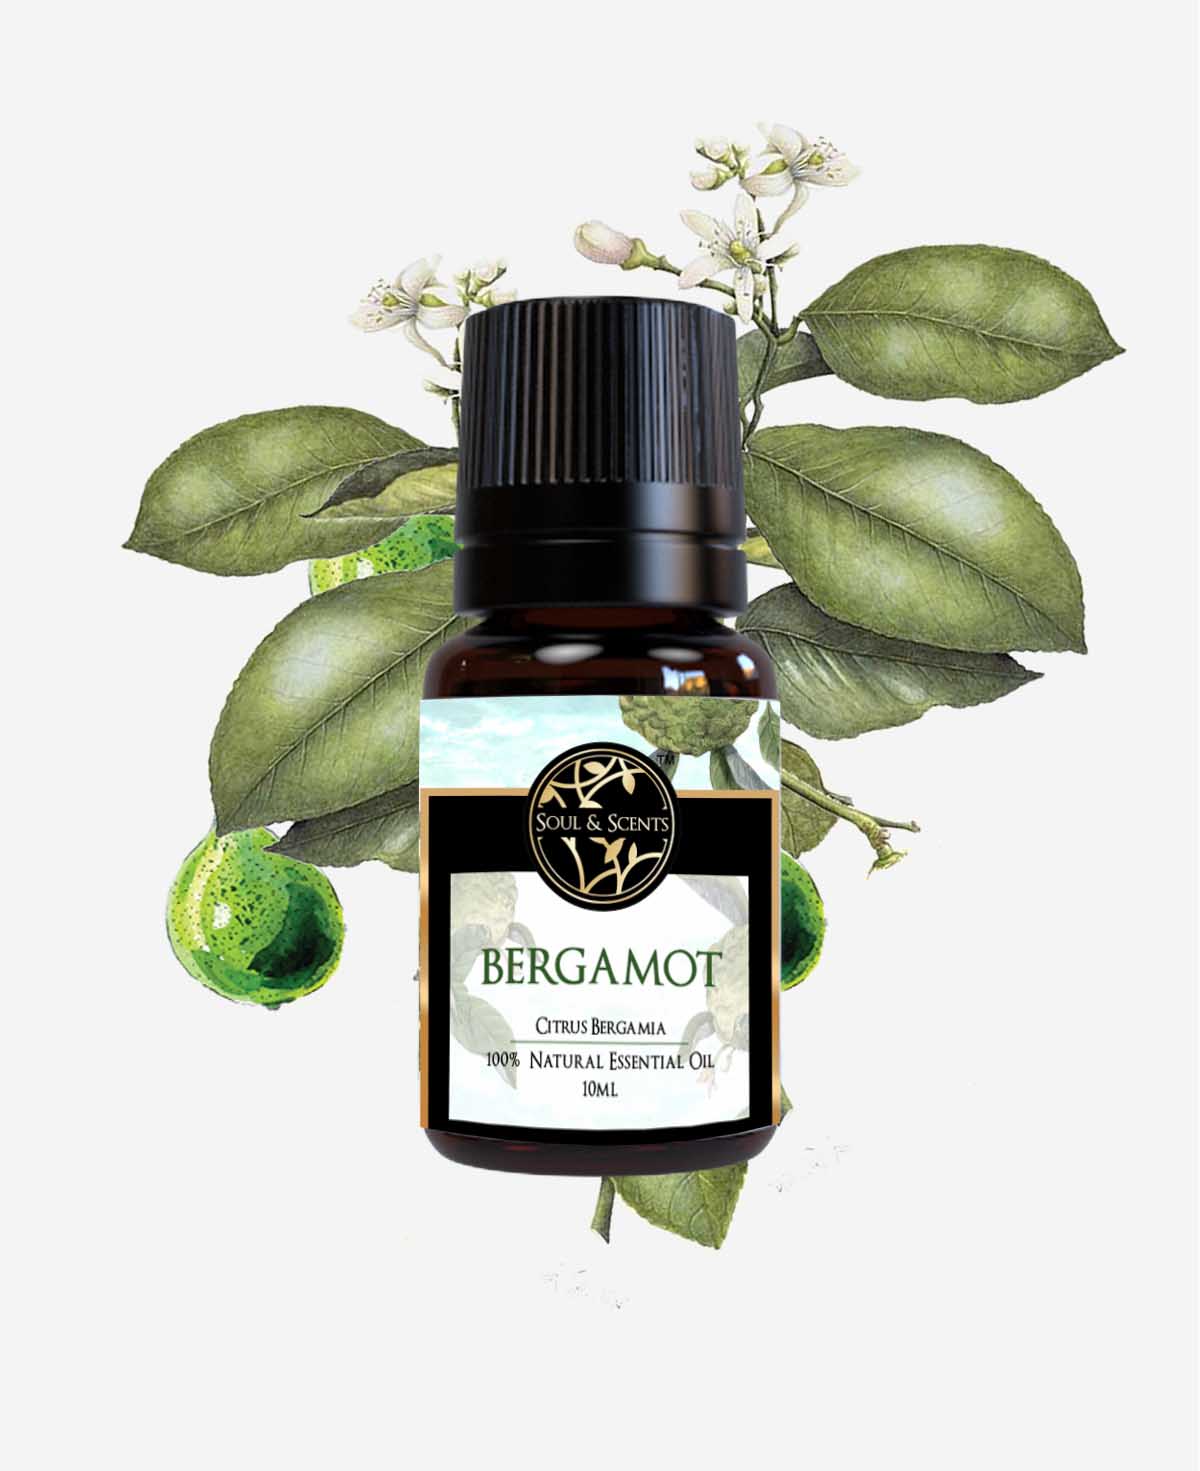 bergamot essential oil; citrus bergamot oil by Soul and Scents